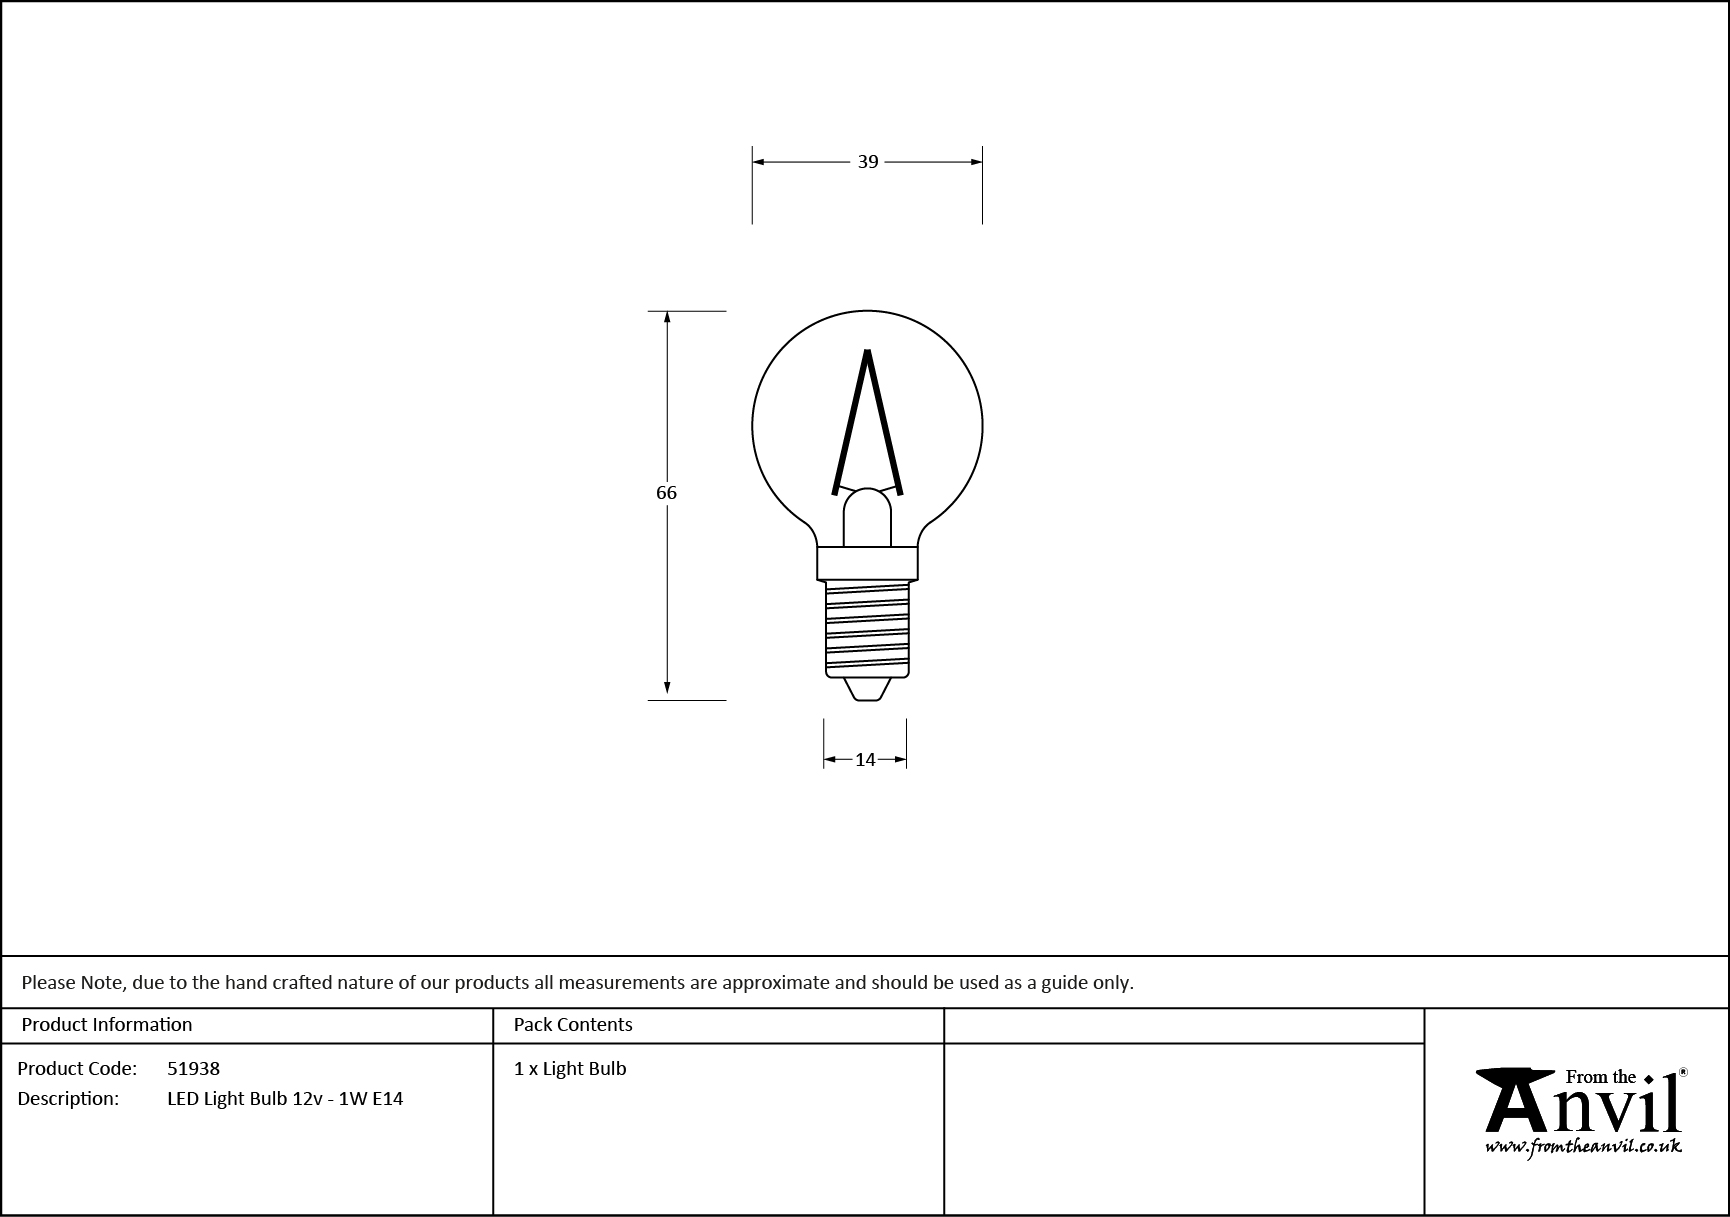 finish LED Light Bulb 12v - 1W E14 | From The Anvil